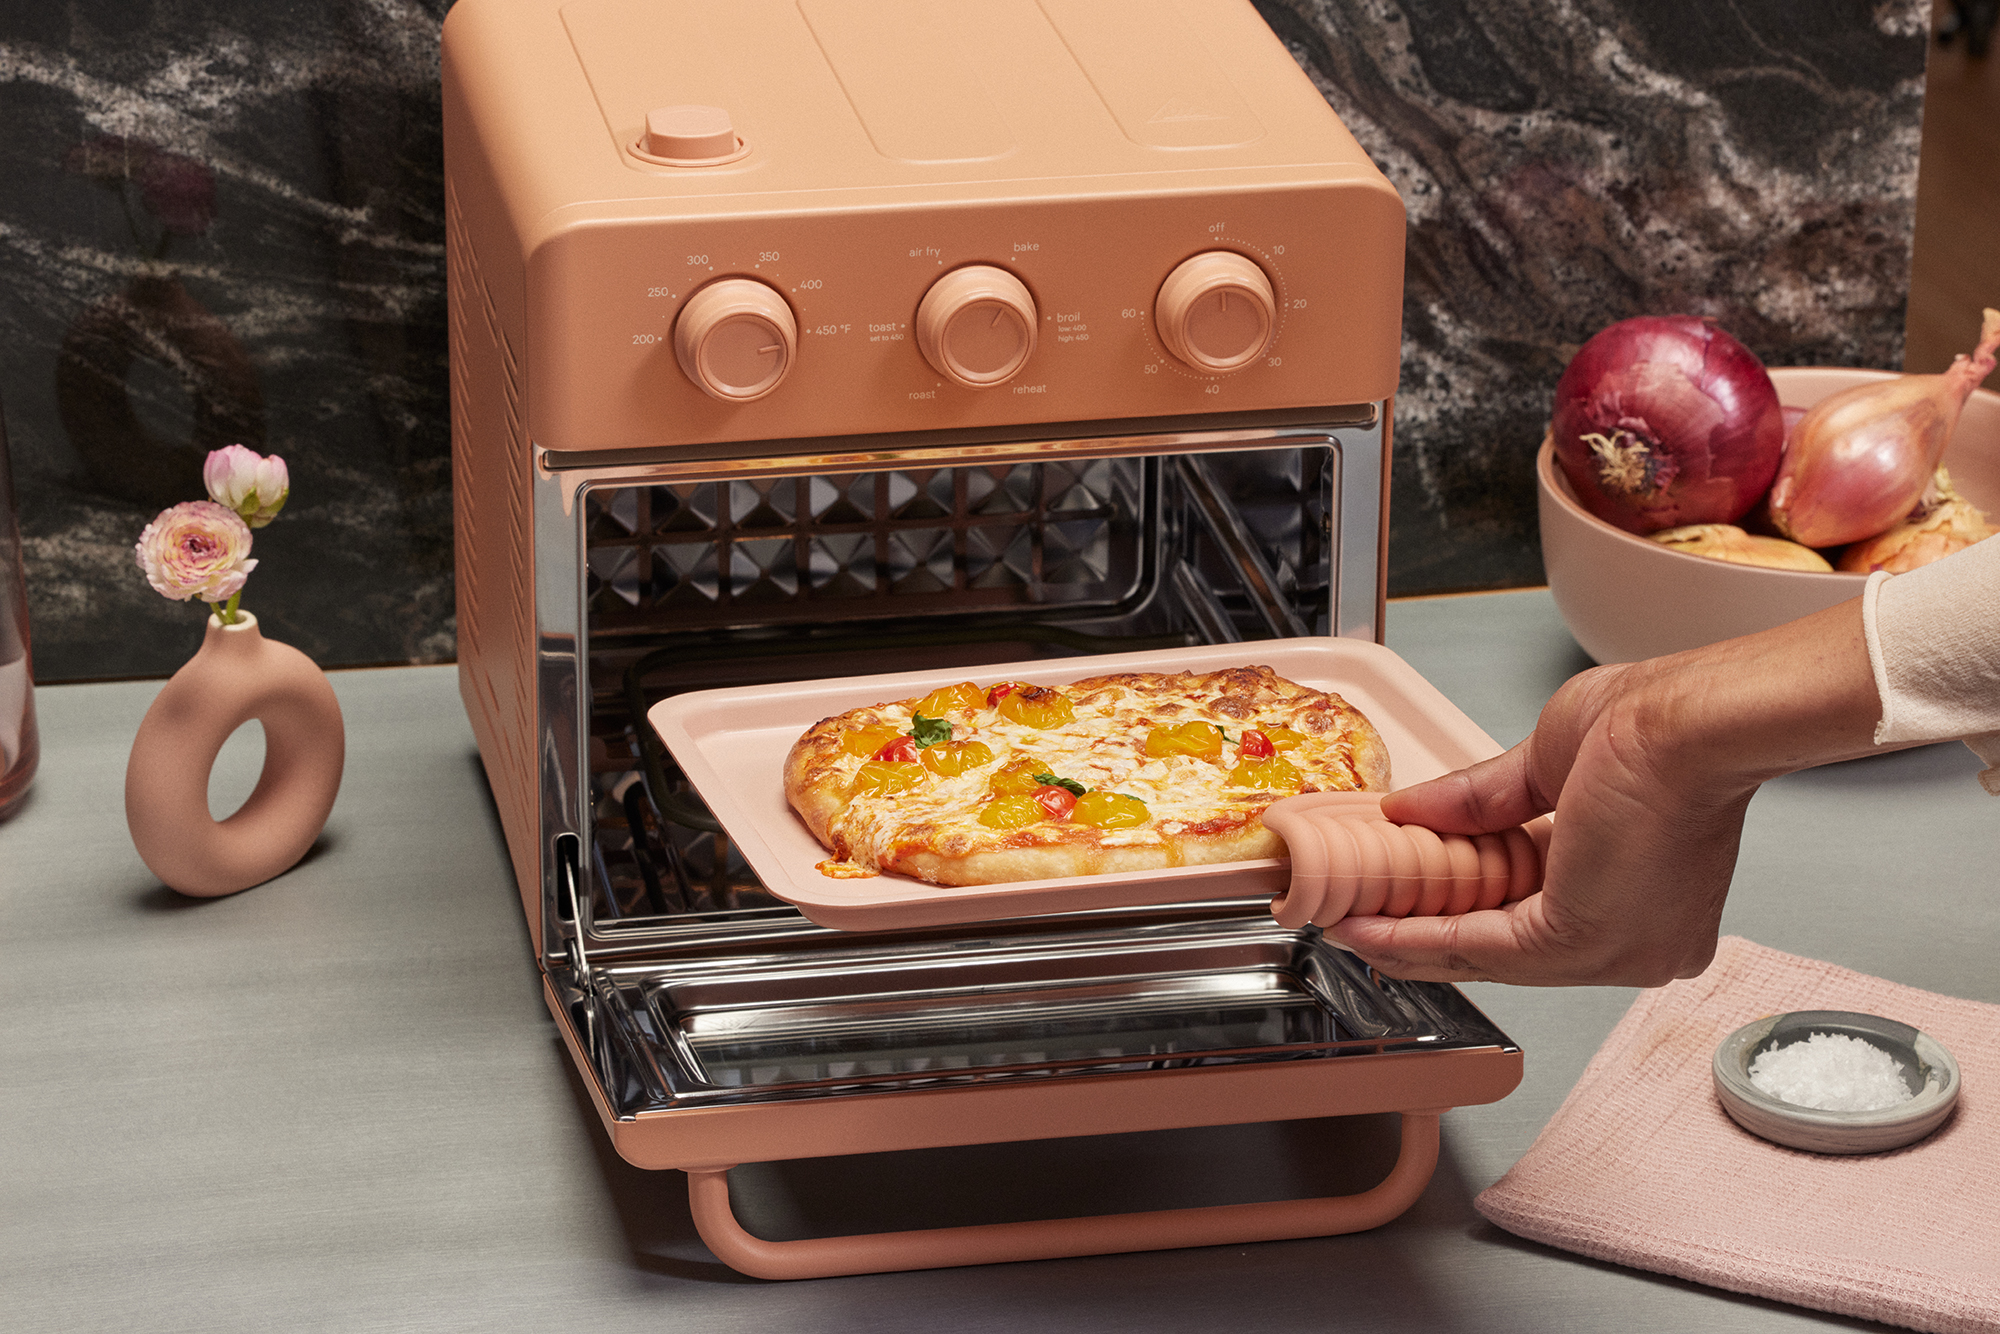 Wonder Oven reheating pizza